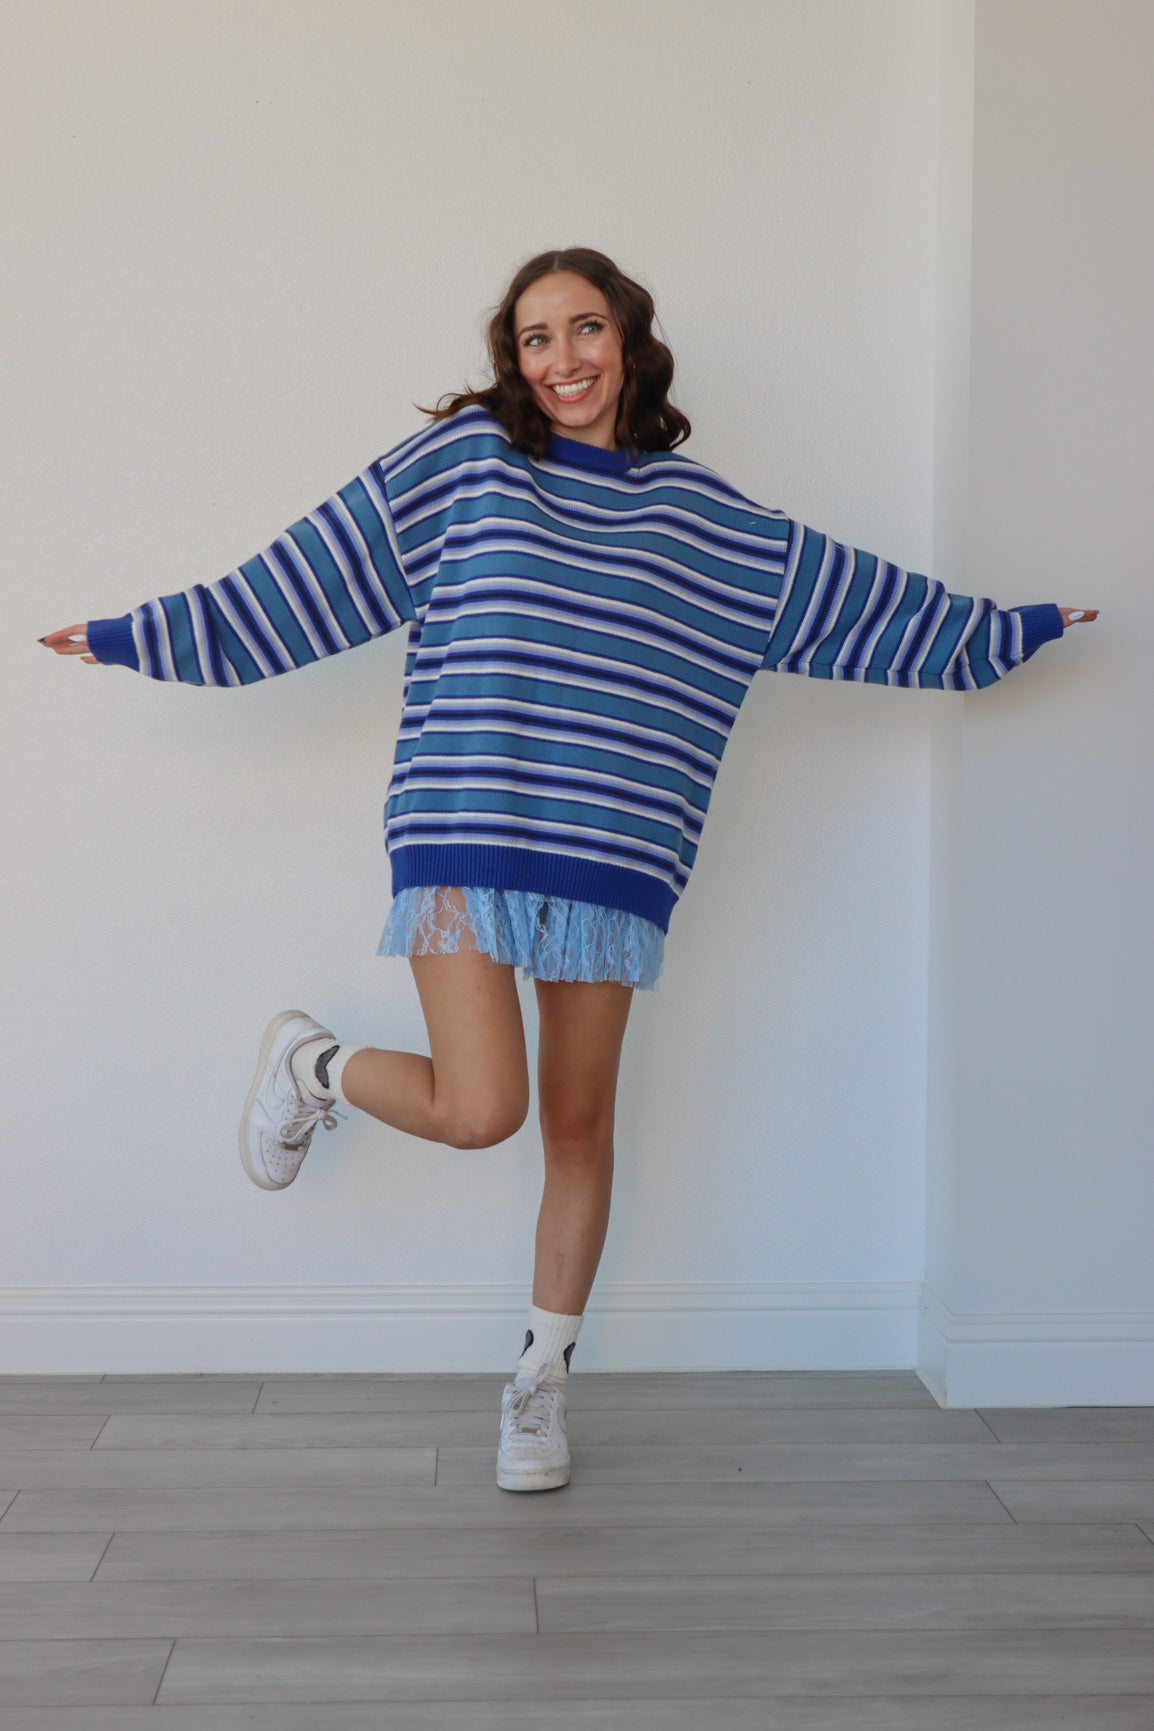 girl wearing blue striped sweater